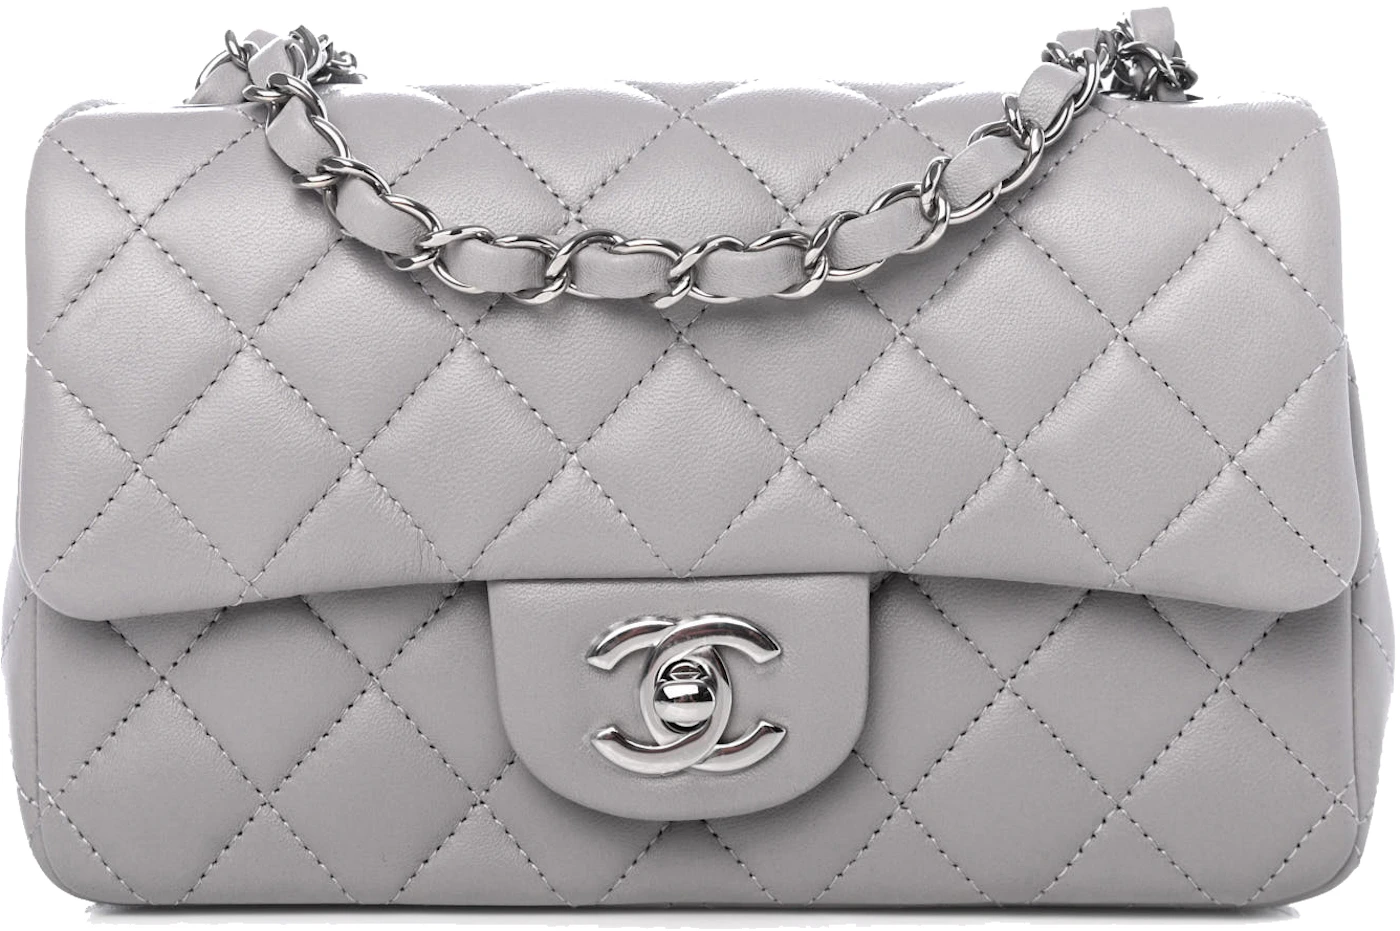 Chanel Light Grey Quilted Lambskin Mini Classic Flap Handbag